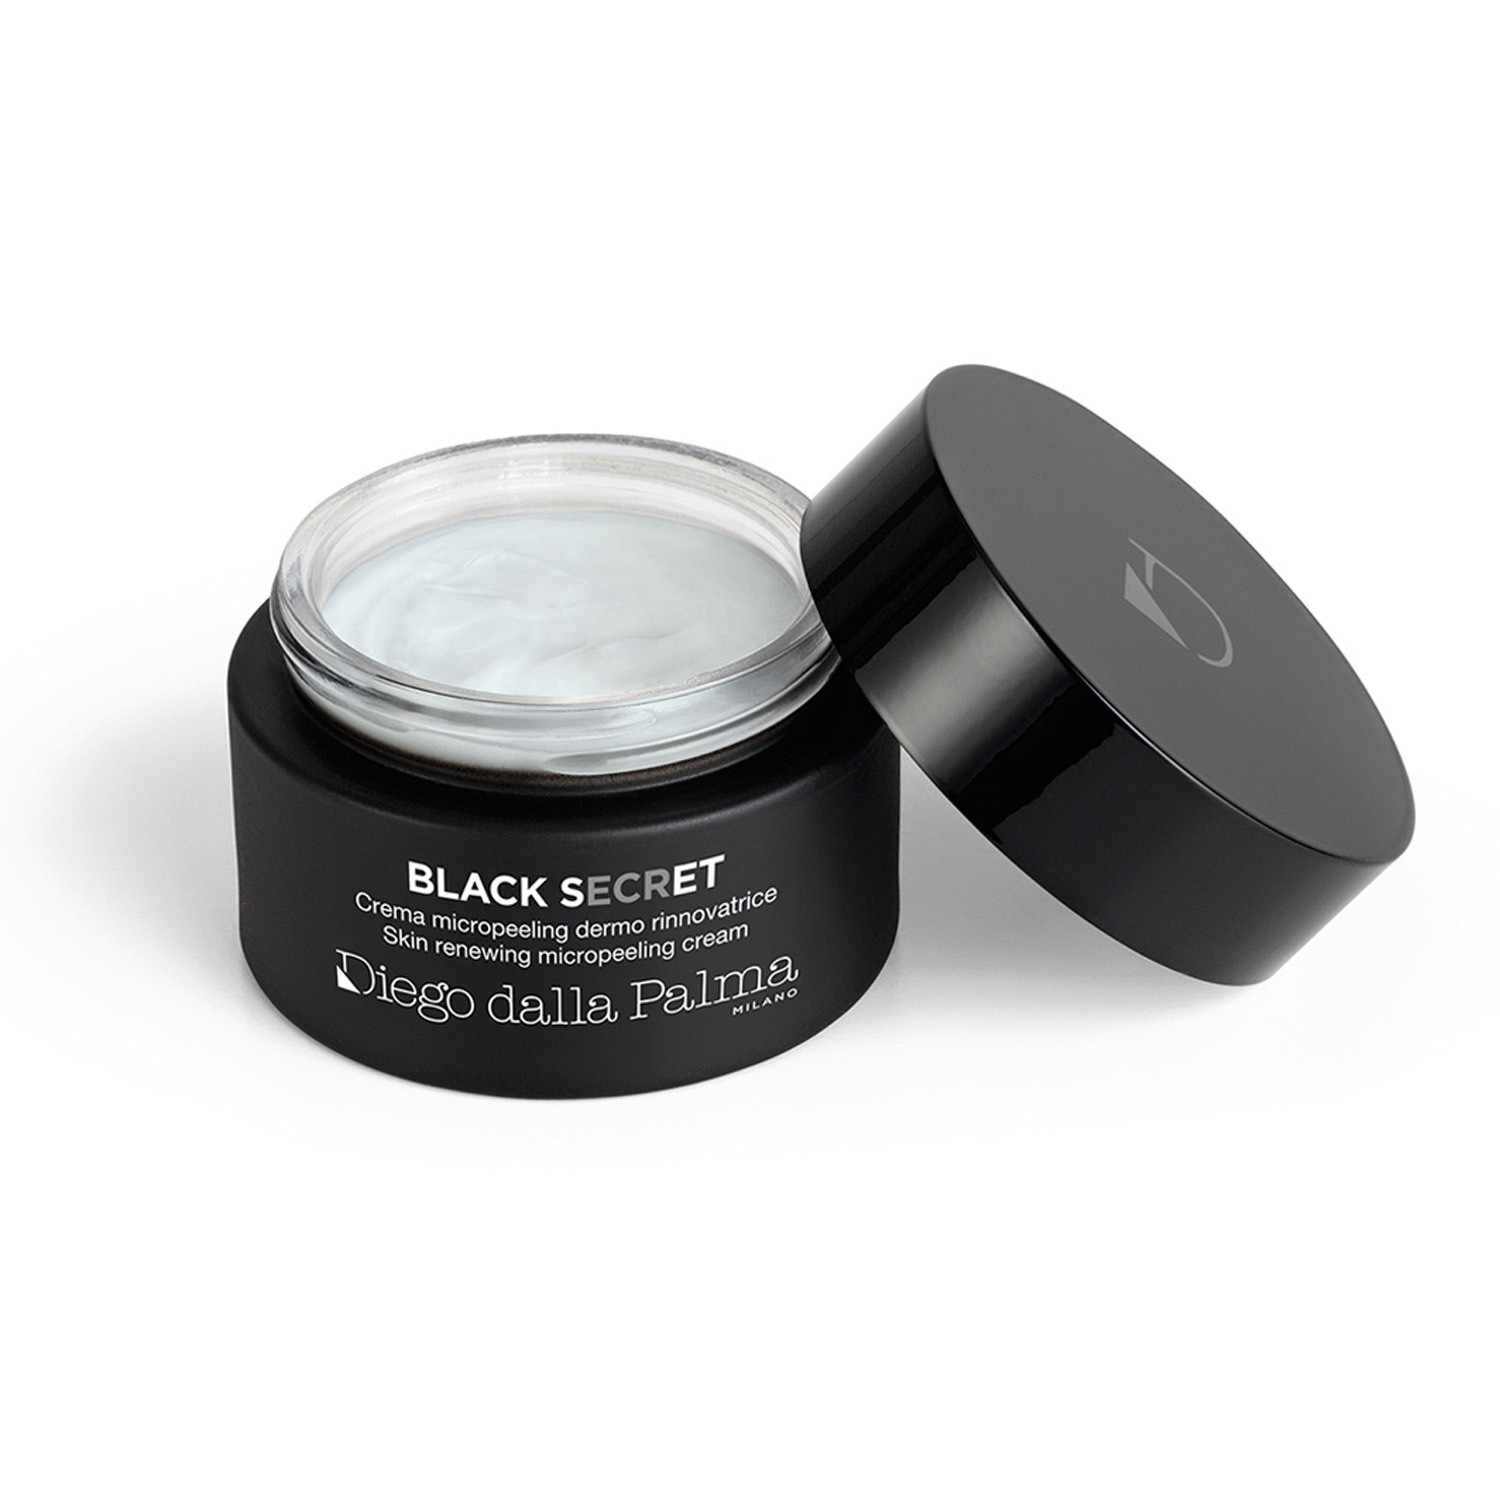 BLACK SECRET - Skin Renewing Micropeeling Cream, Black, large image number 1